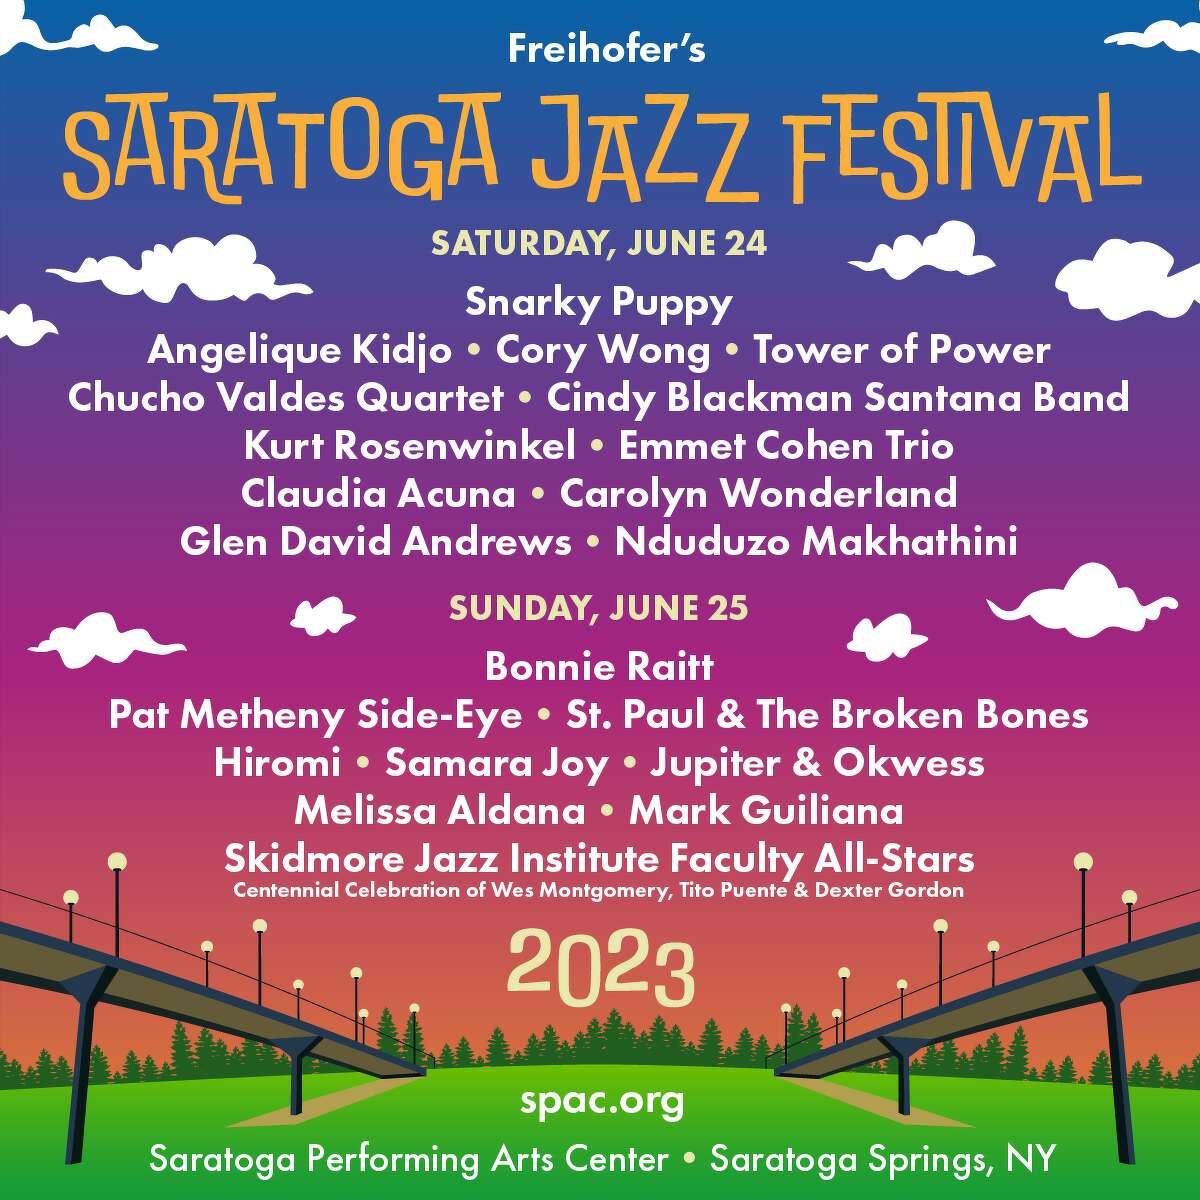 Bonnie Raitt returns to the Saratoga Jazz Festival at SPAC